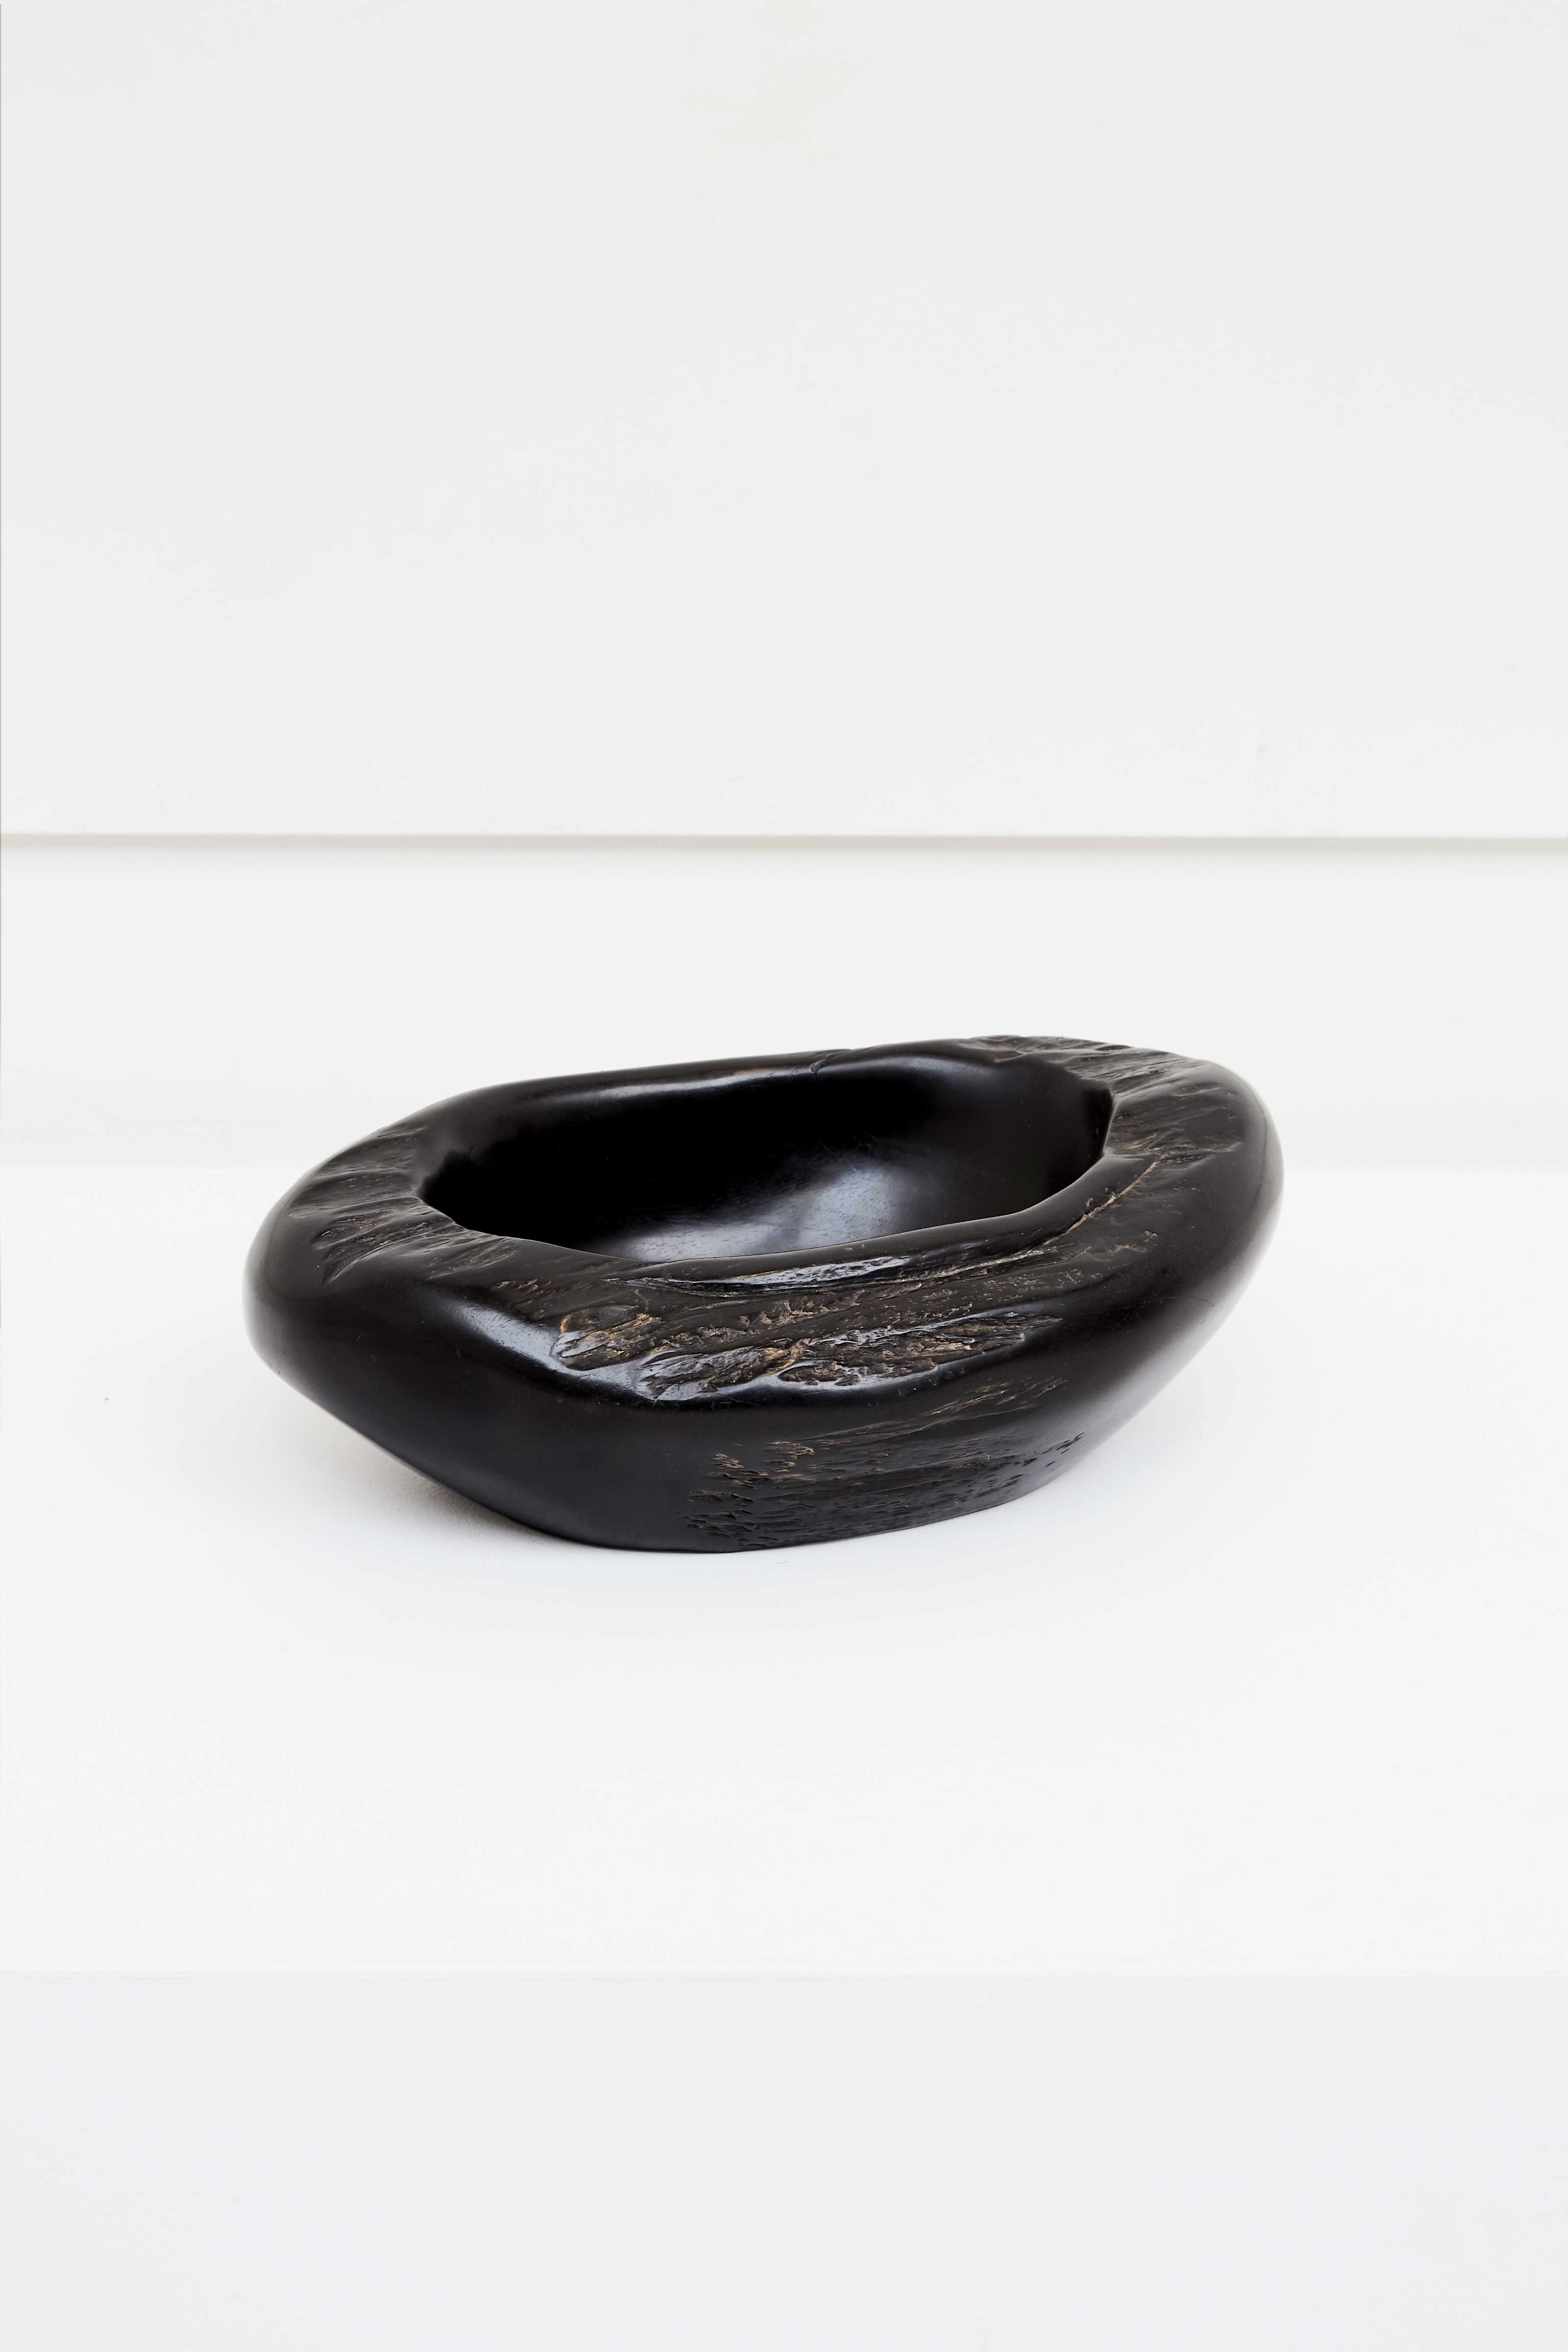 Alexandre Noll, Large ebony bowl, vue 02